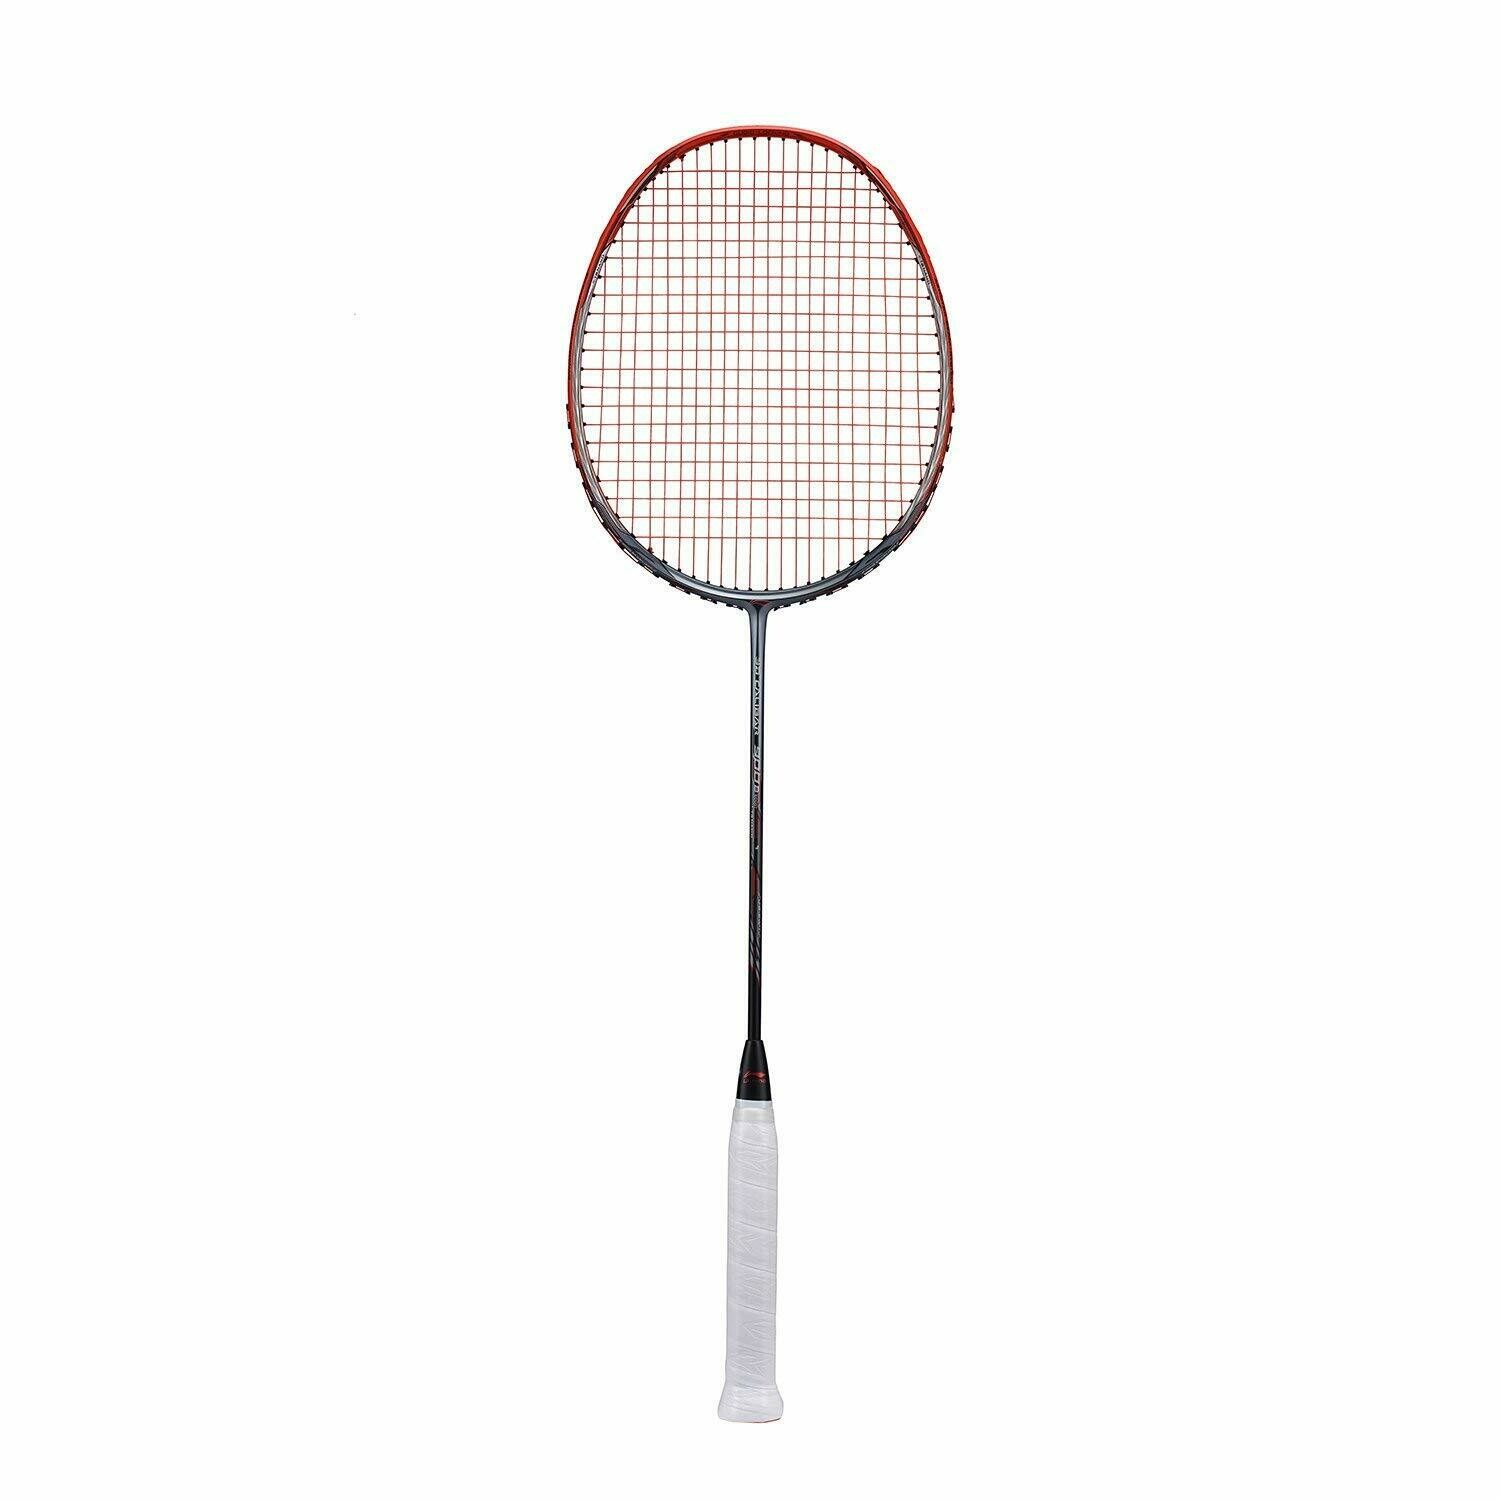 LI-NING 2018 Chen Long 3D CALIBAR 900B Badminton Racket | Red Grey